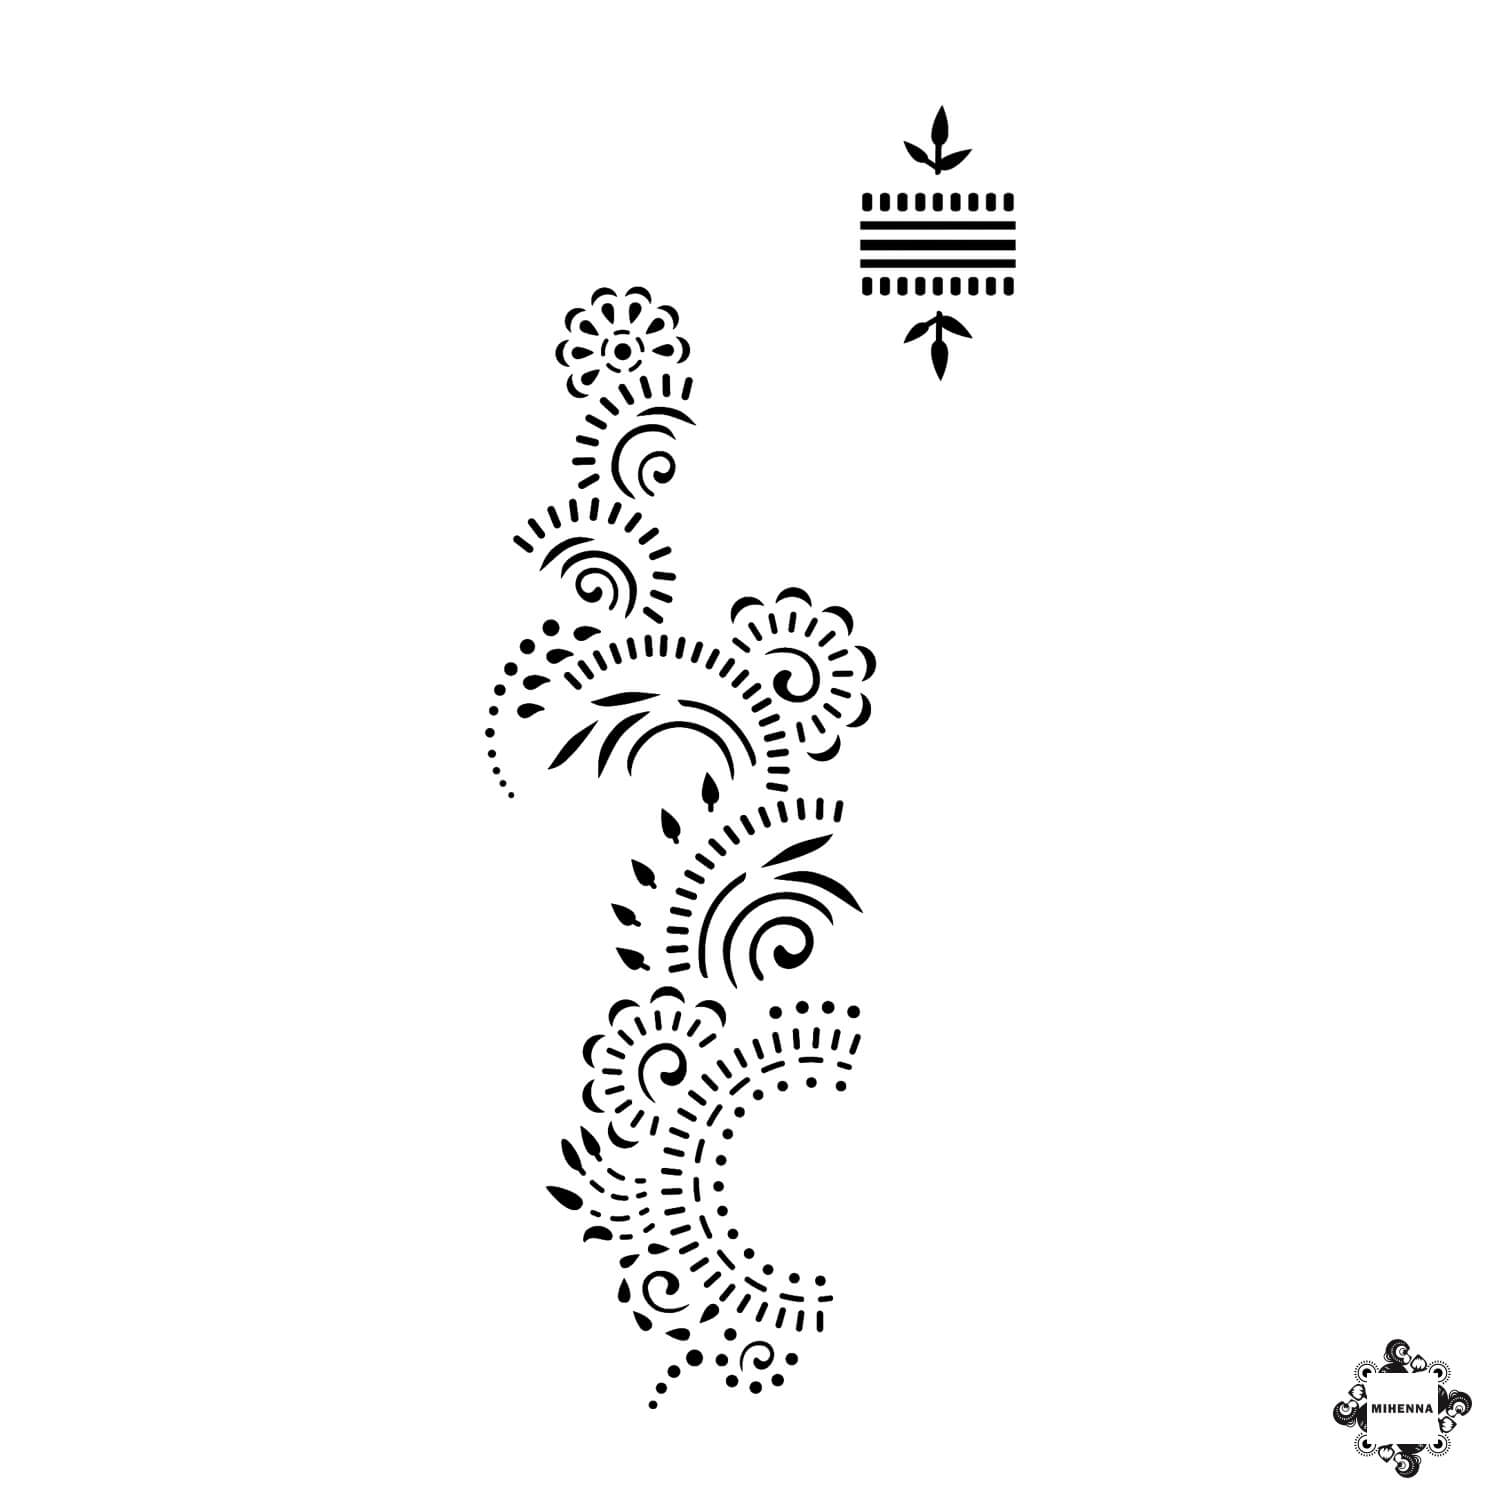 Mehndi stikers price | Mehandi stikers for hands | Henna stencils price |  stikers Mehndi Design - YouTube